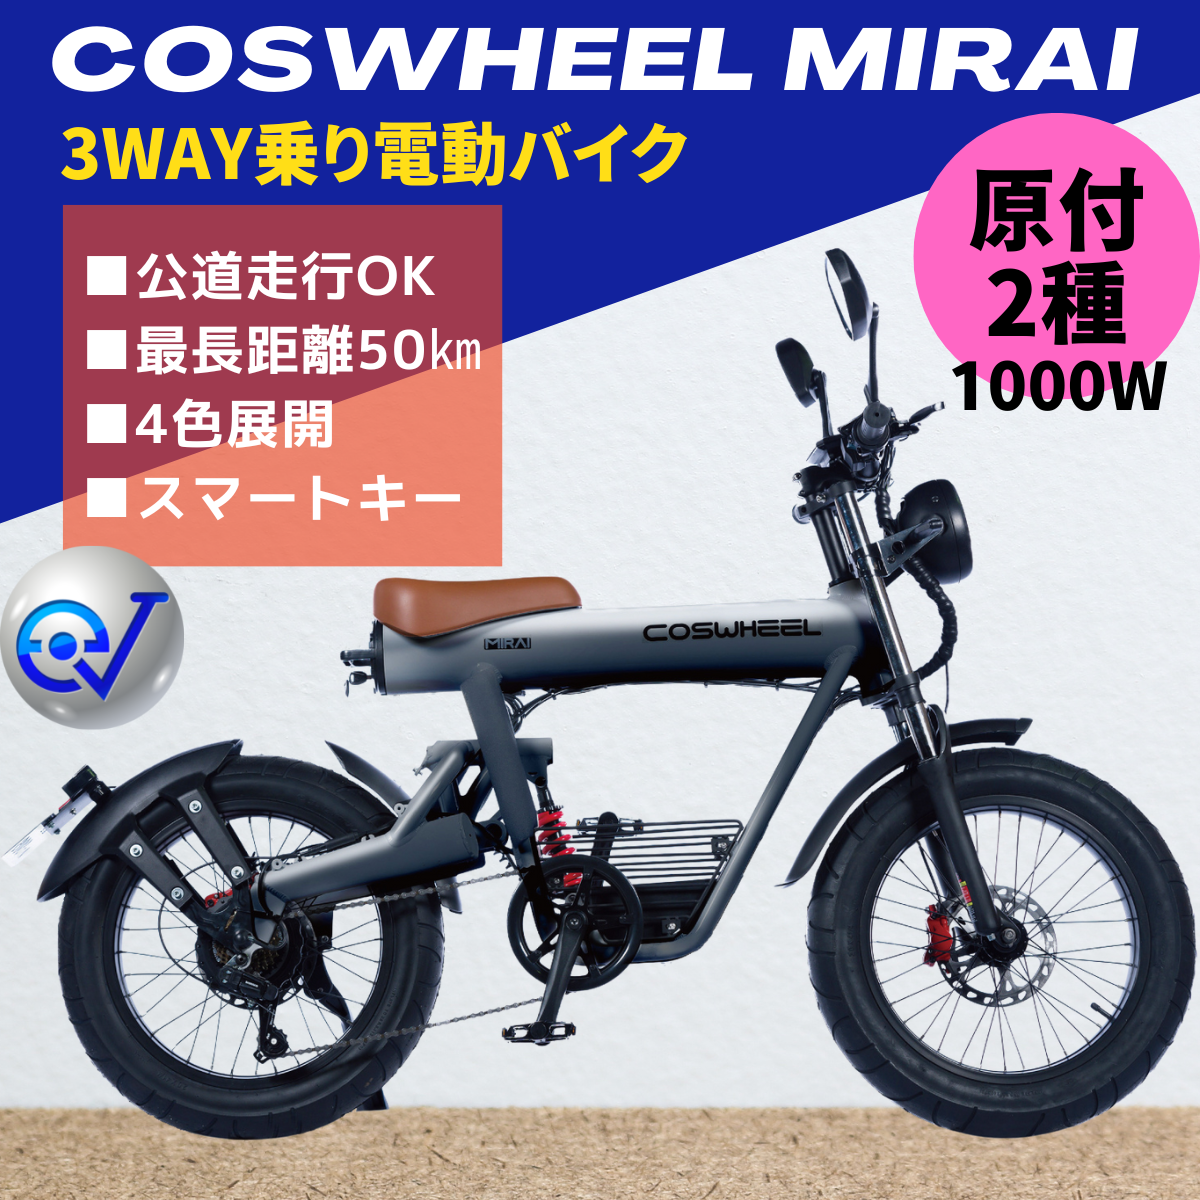 COSWHEEL MIRAI 電動バイク リアキャリア ※荷物専用